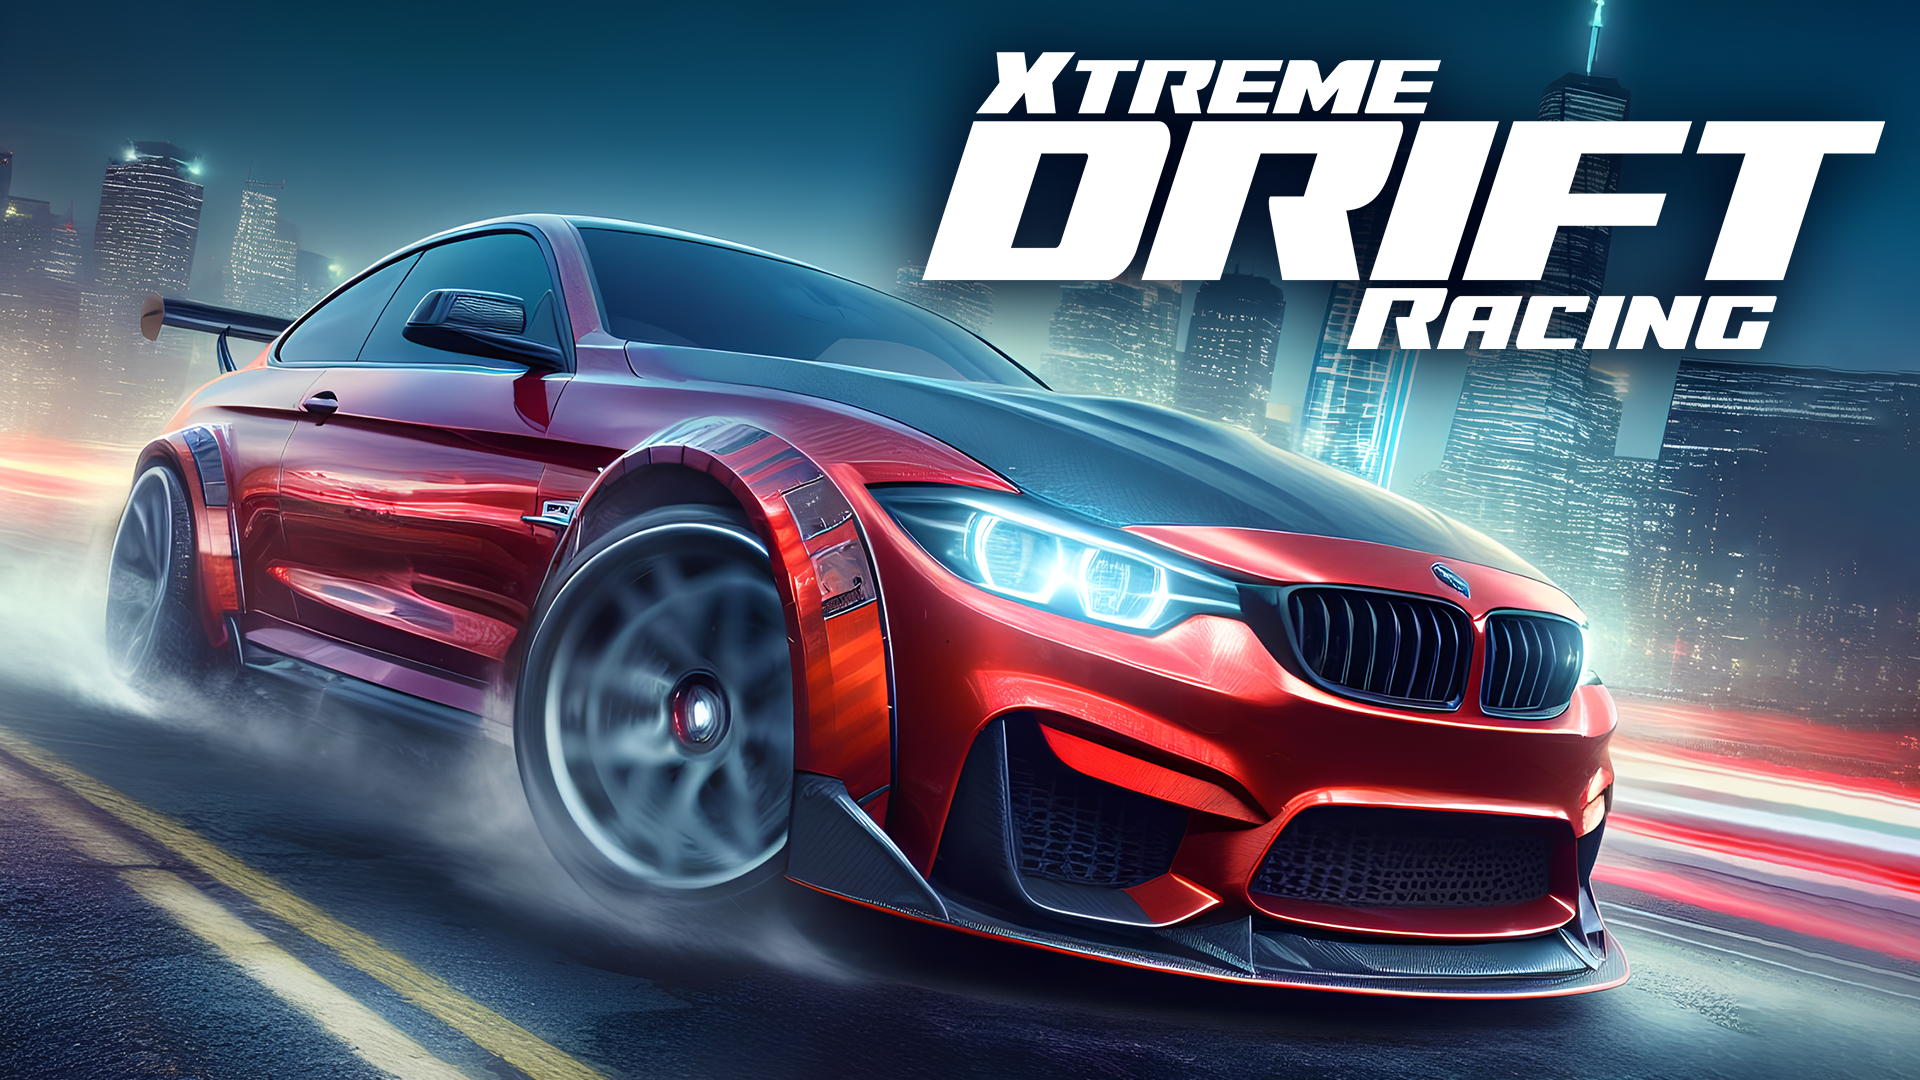 Xtreme DRIFT Racing Game Image